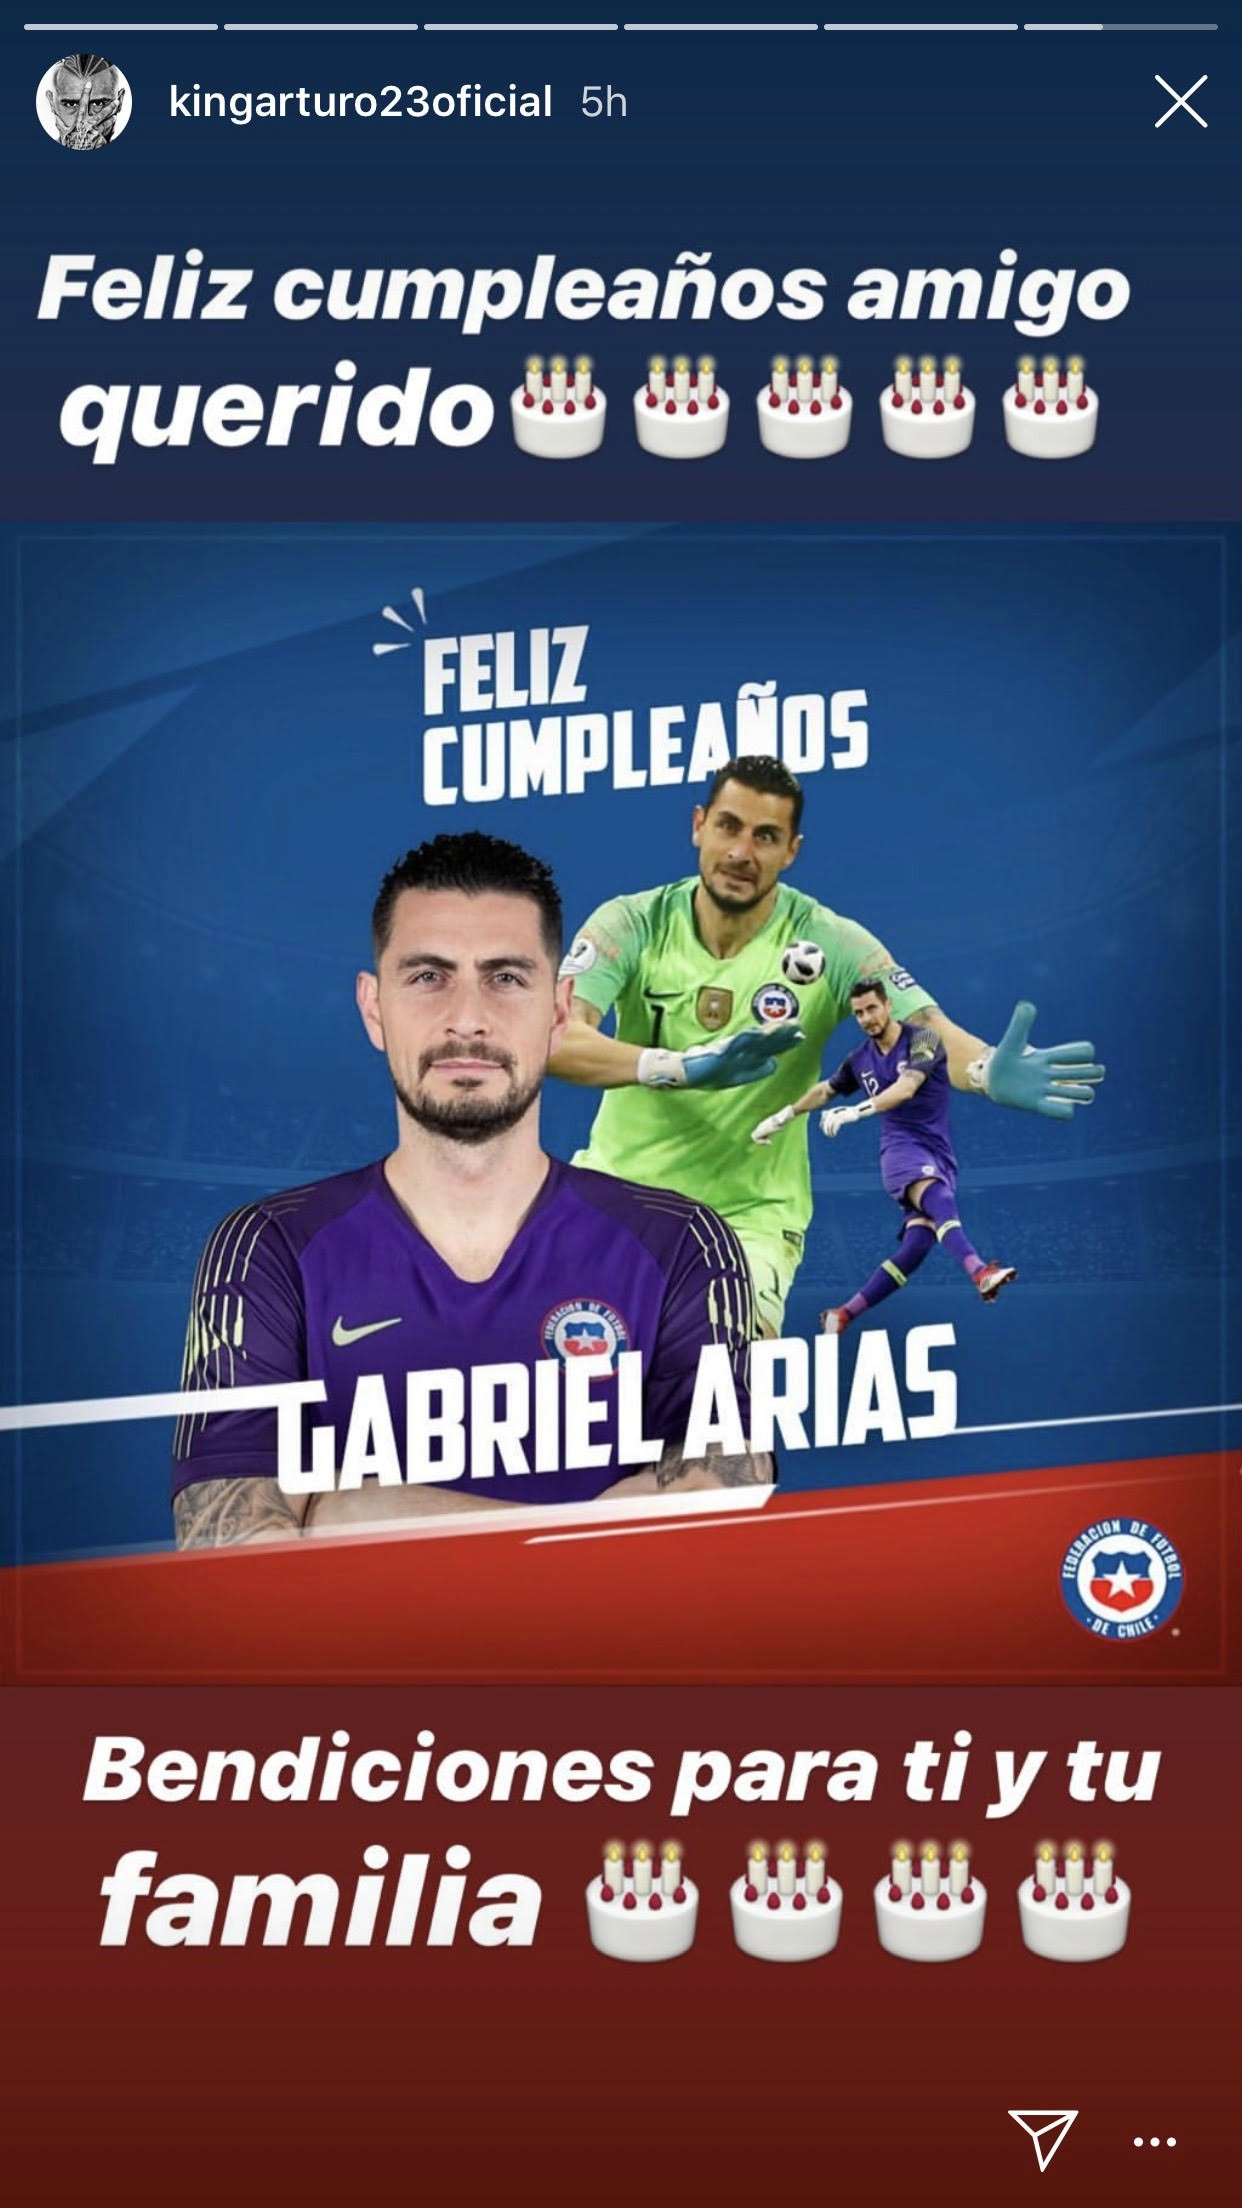 Vidal's affectionate greeting to Gabriel Arias